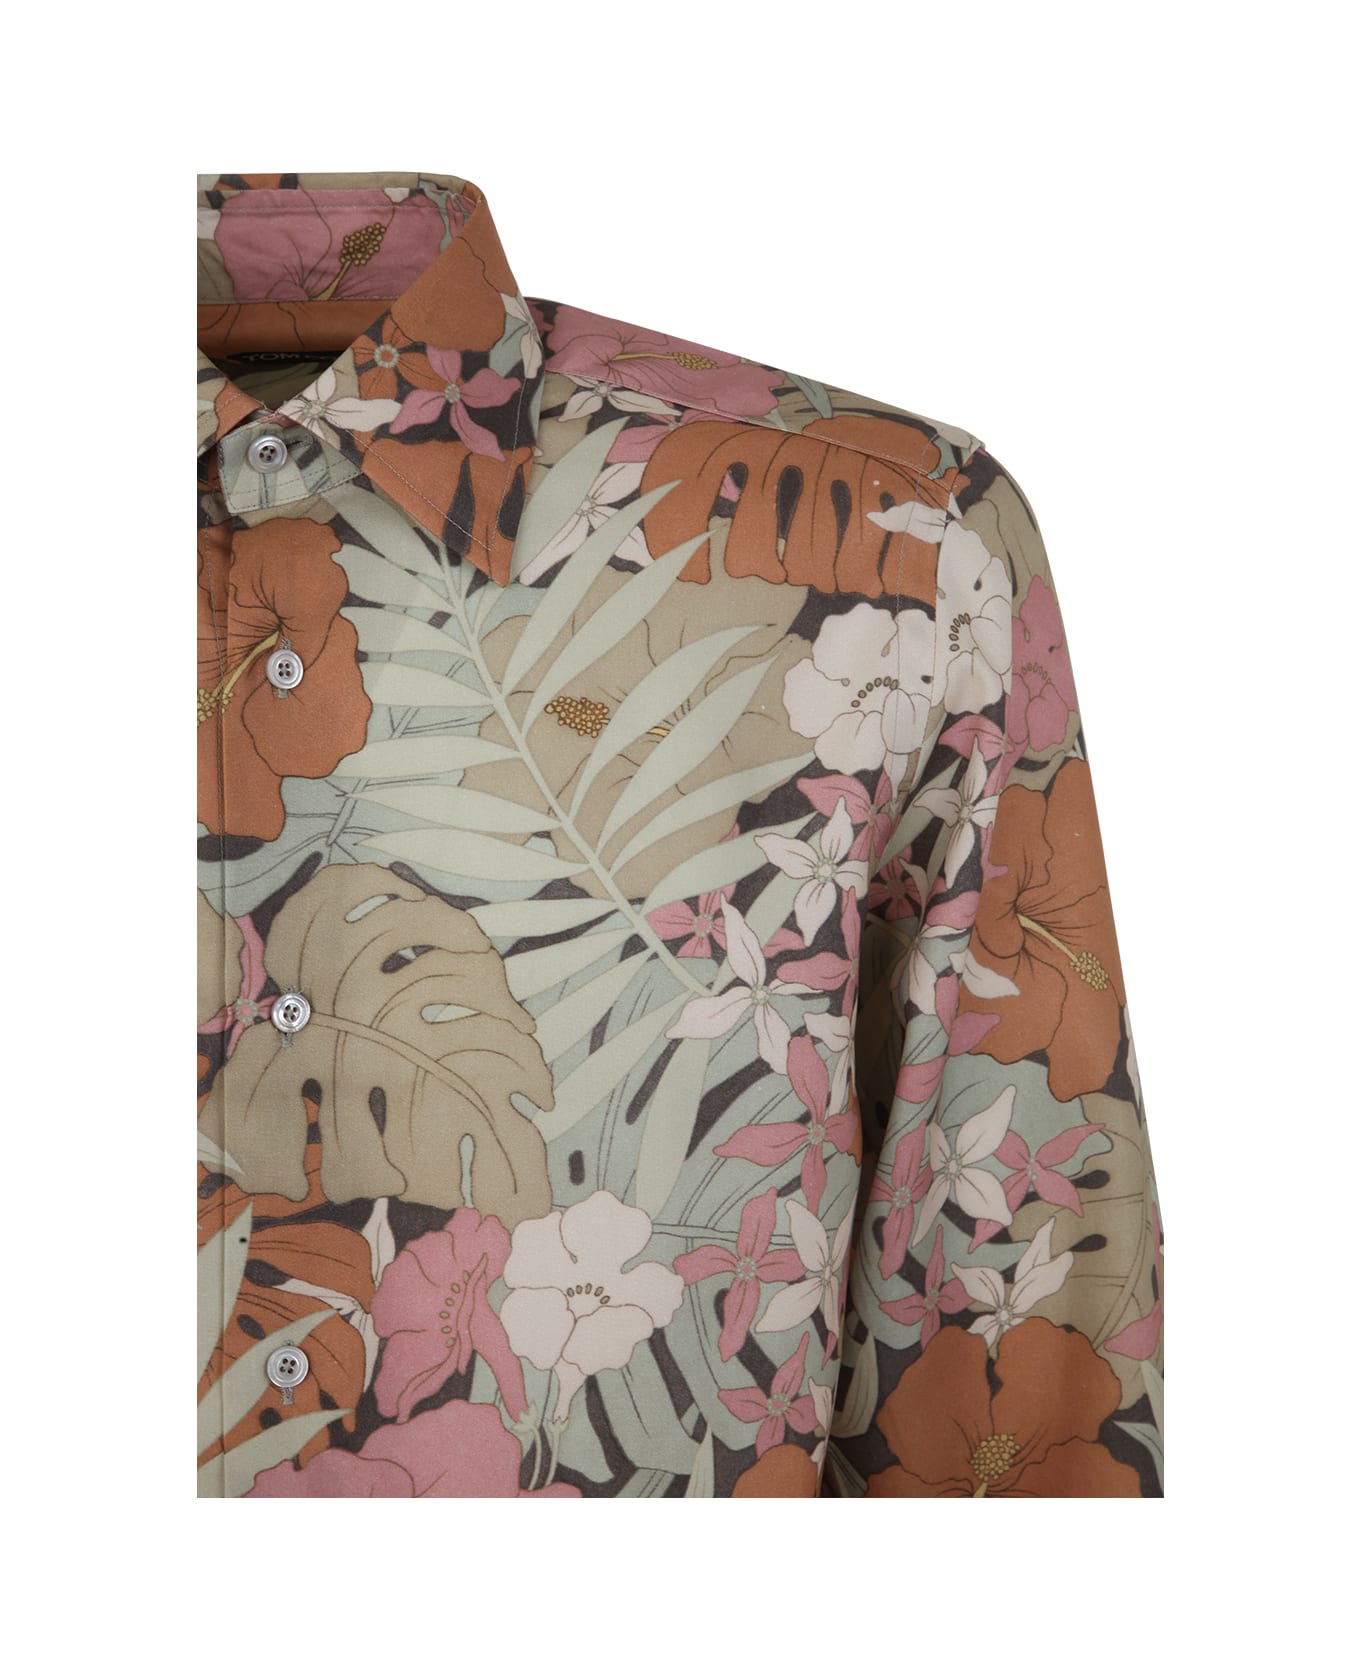 Tom Ford Leisure Man Shirt - Zfgdp Combo Sage Antique Pink シャツ